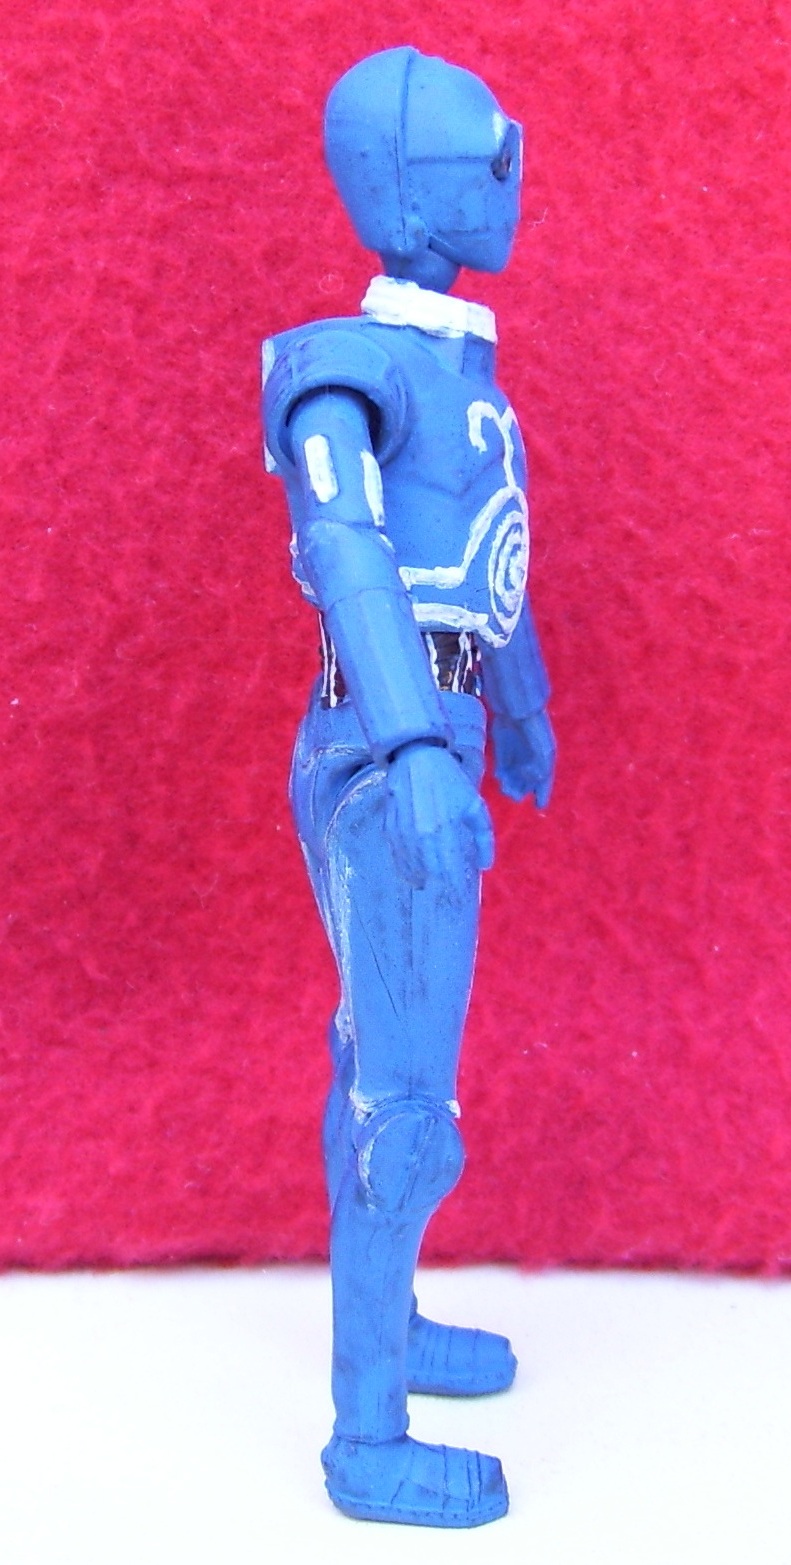 custom kék protokoll droid figura 
oldalról